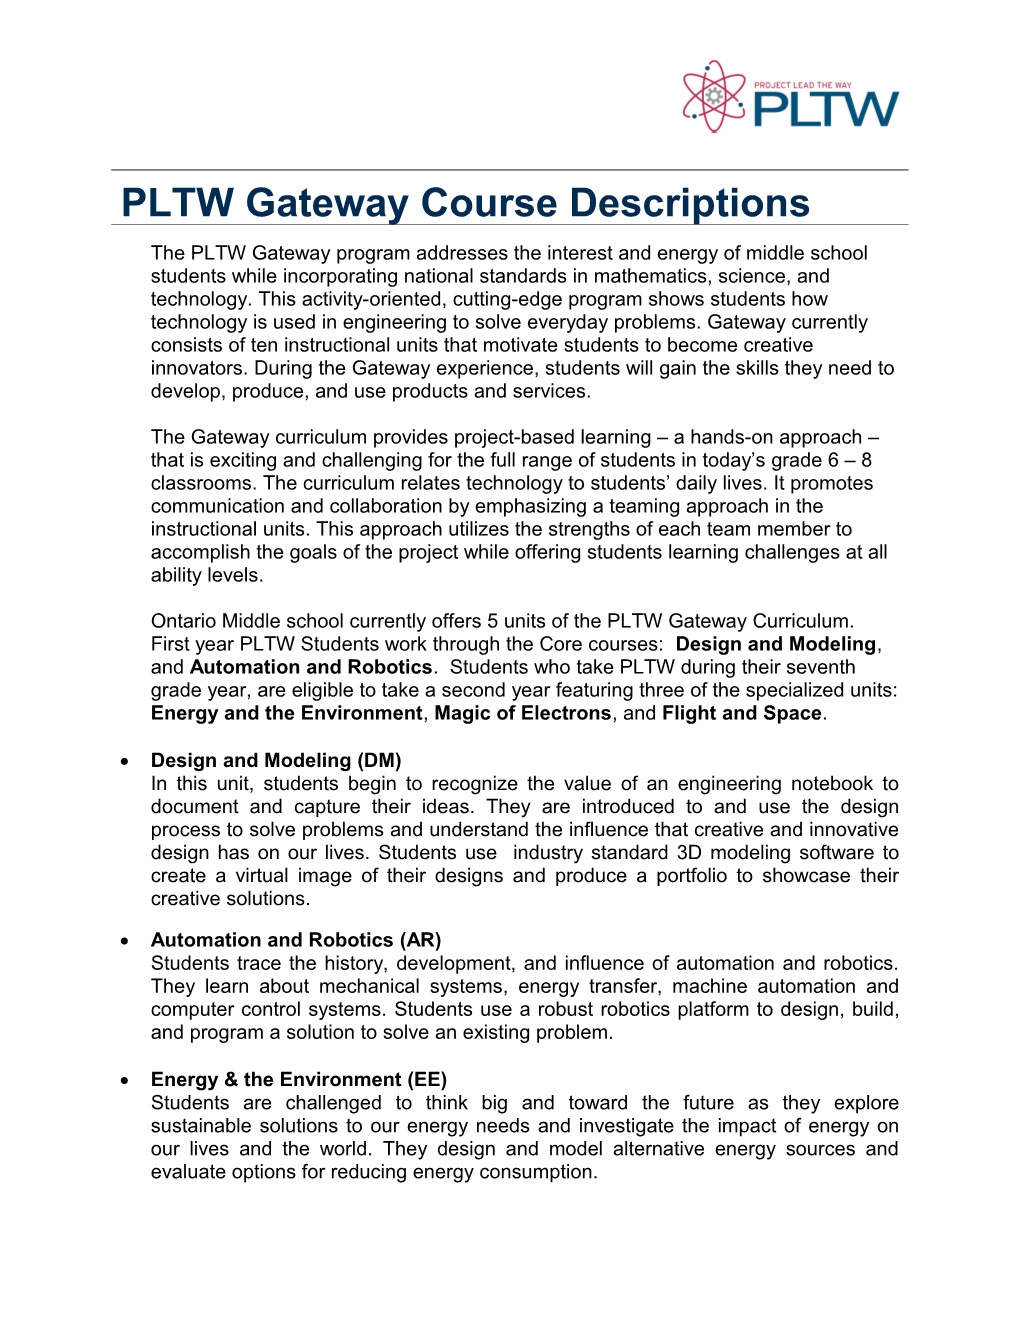 GTT Course Description